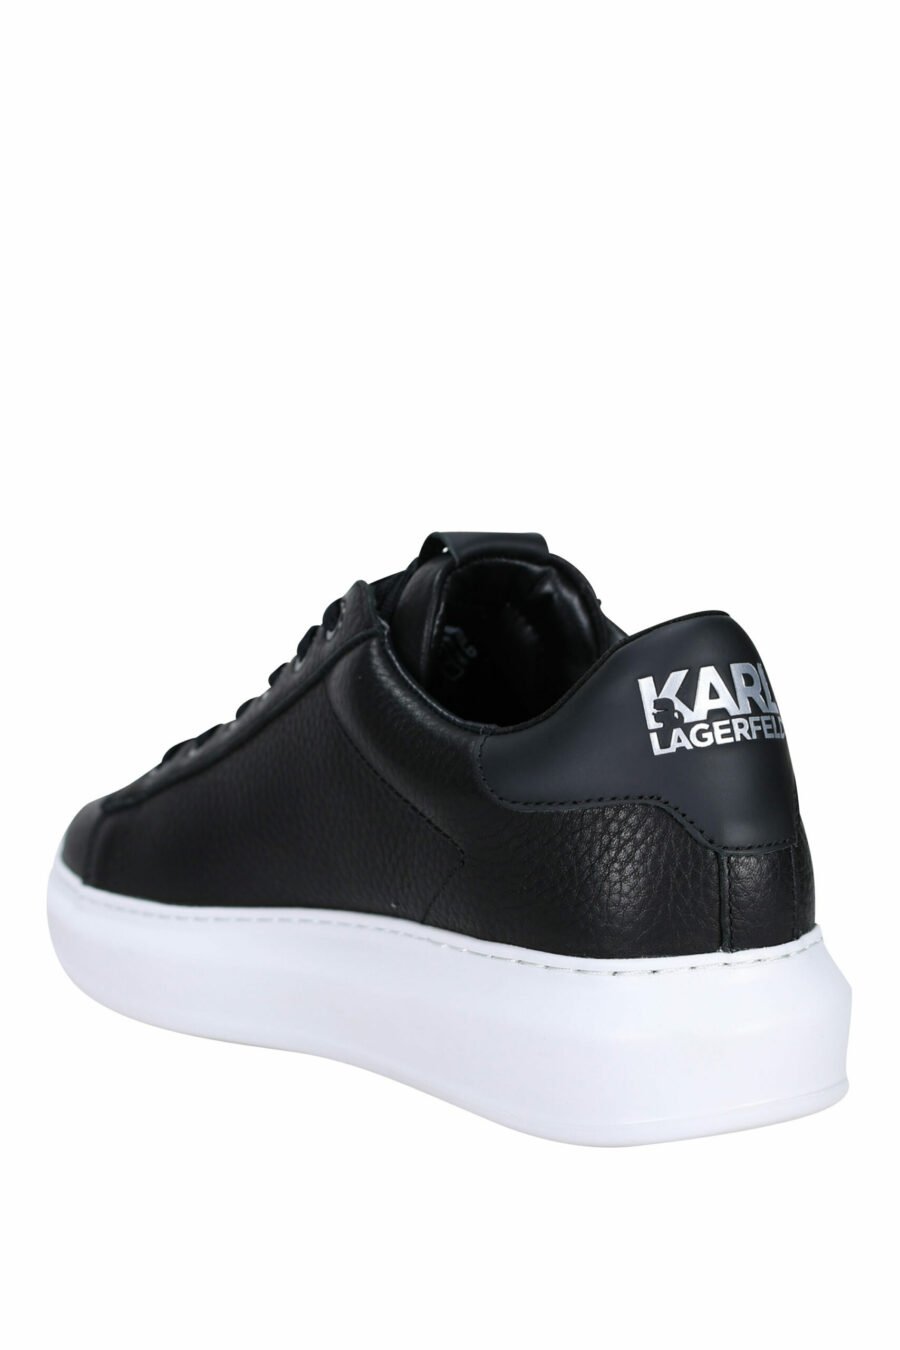 Zapatillas negras "kapri mens" con textura y logo "rue st guillaume" blanco - 5059529323782 3 scaled